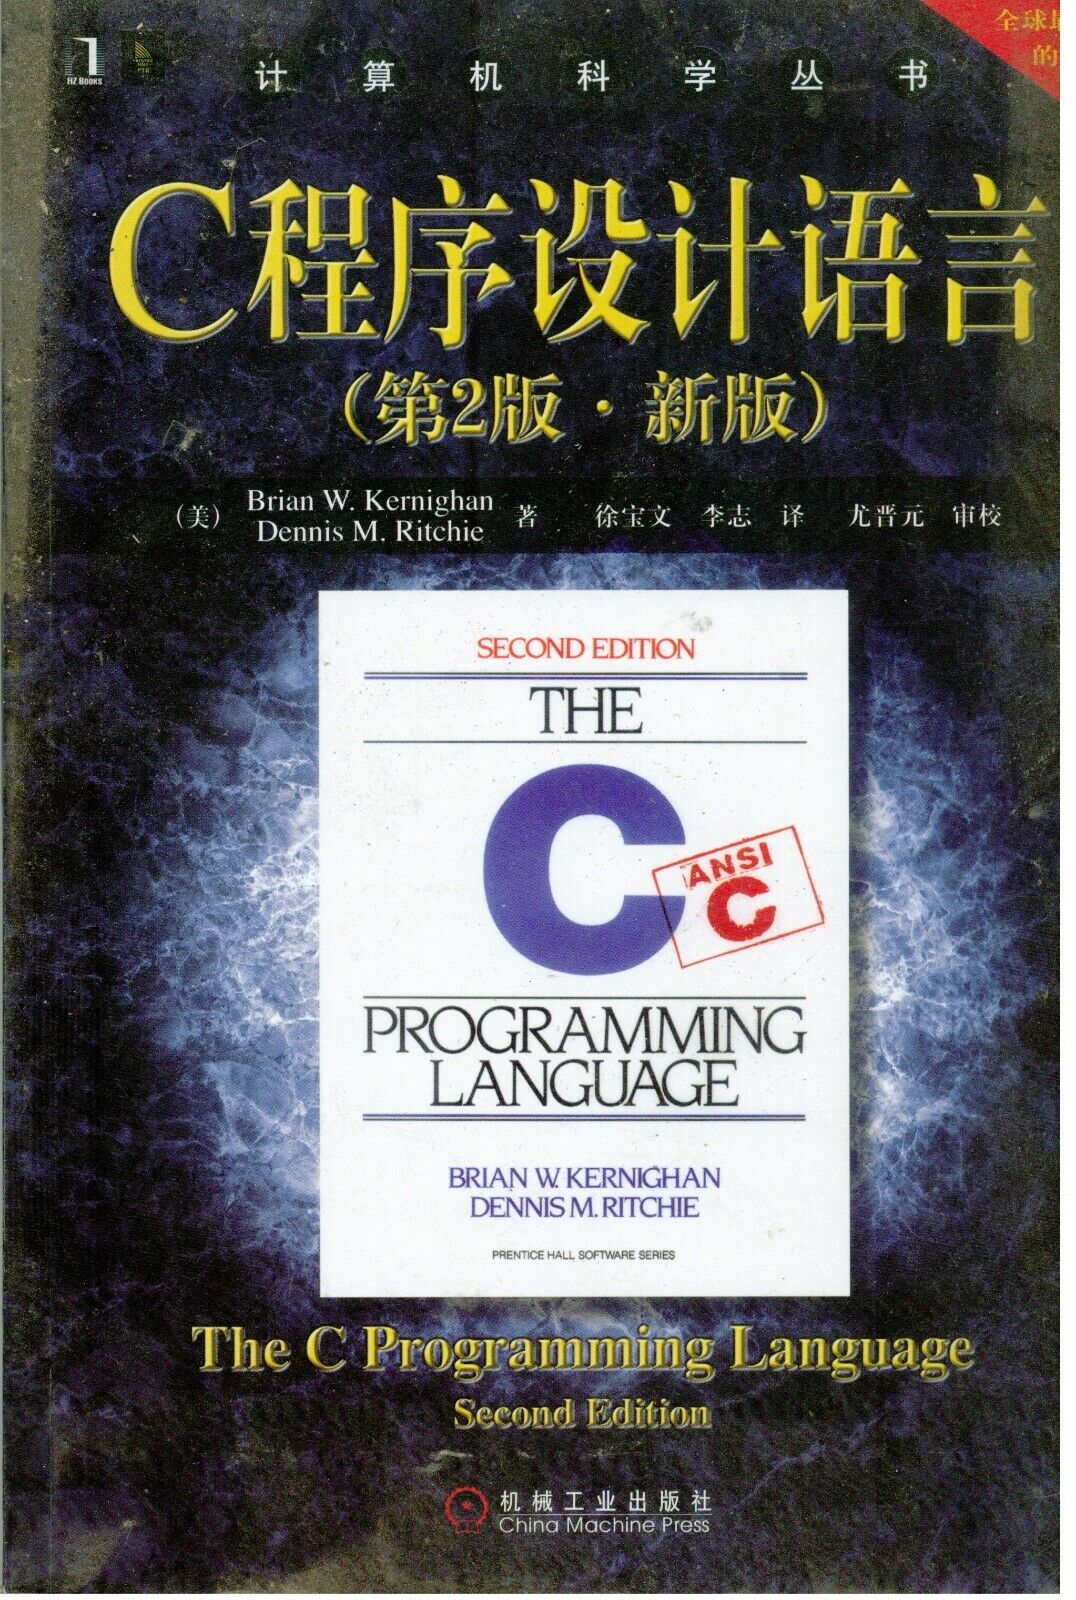 ITHistory (2004) BOOK: C PROGRAMMING LANGUAGE 2nd (Chinese) (Kernighan/ Ritchie